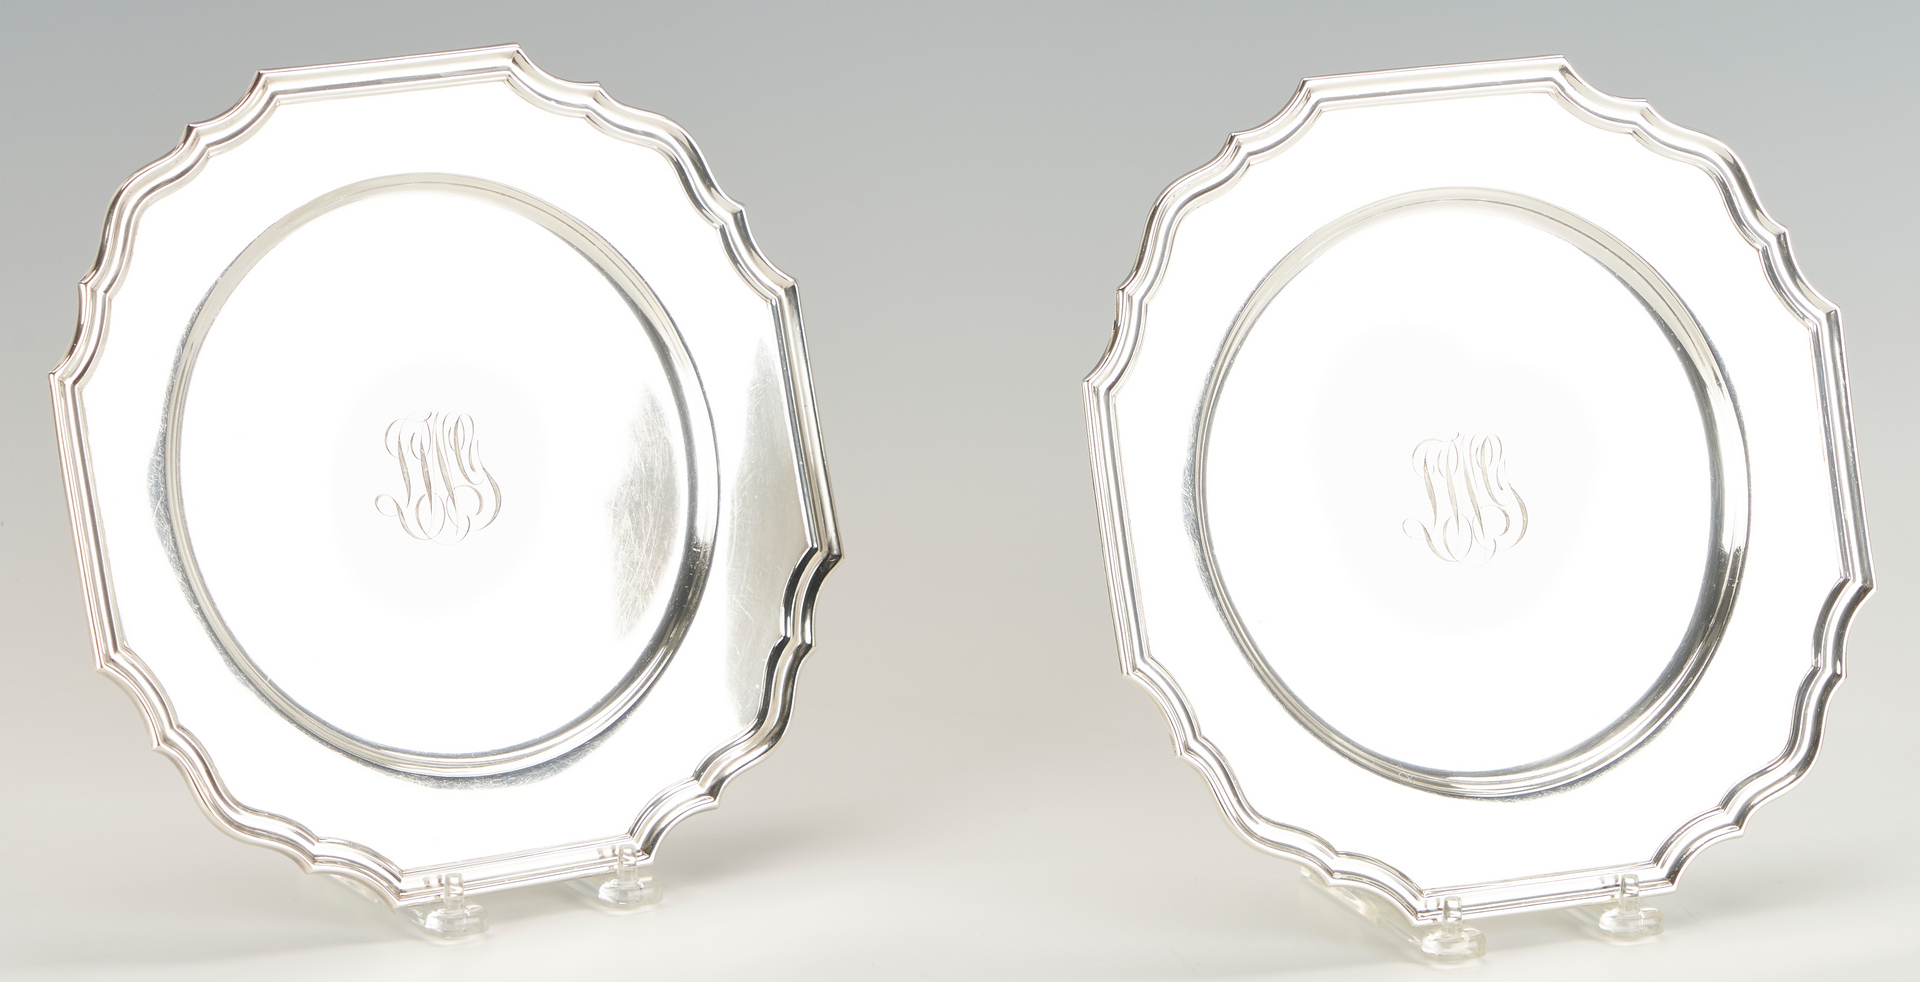 Lot 75: 6 Gorham Octagonal Sterling Silver Plates